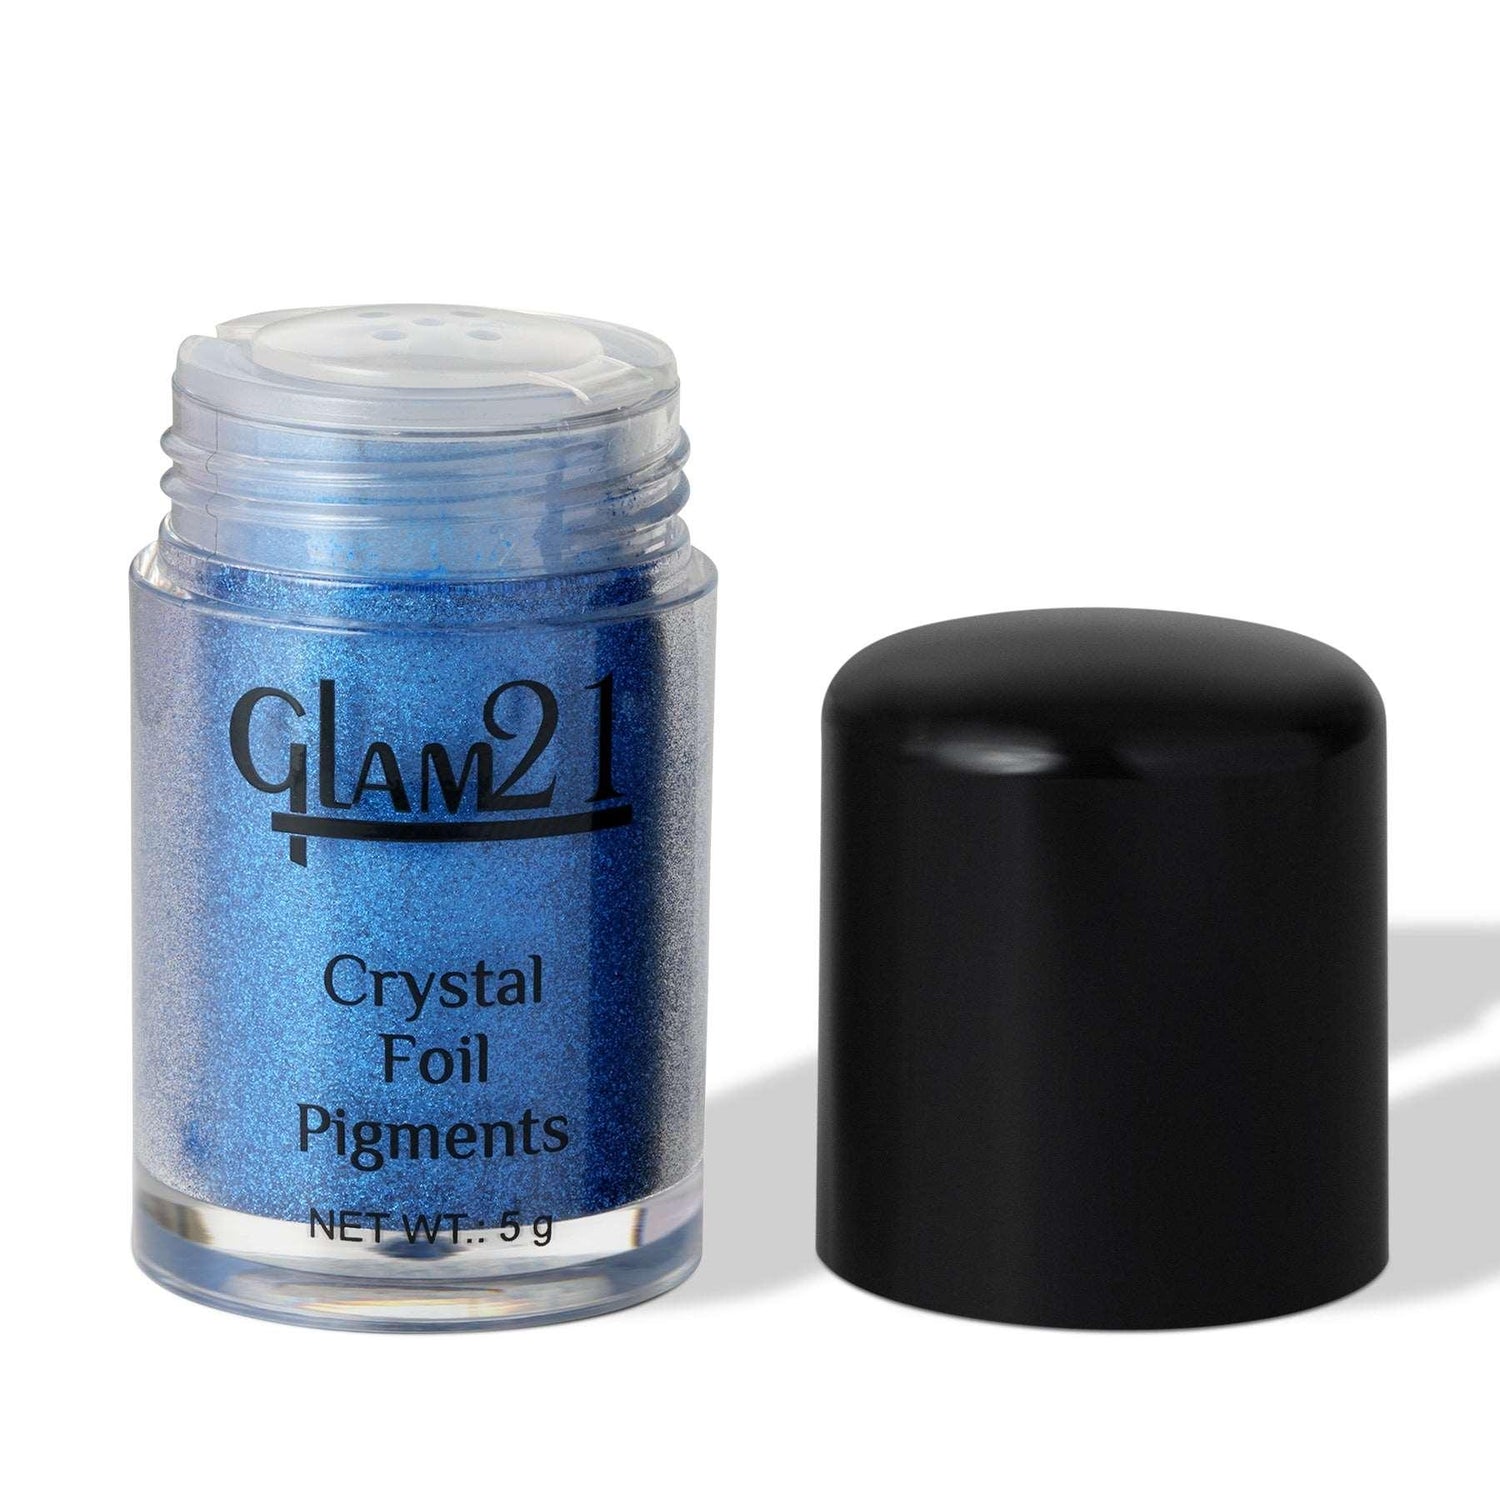 Crystal Foil Pigments